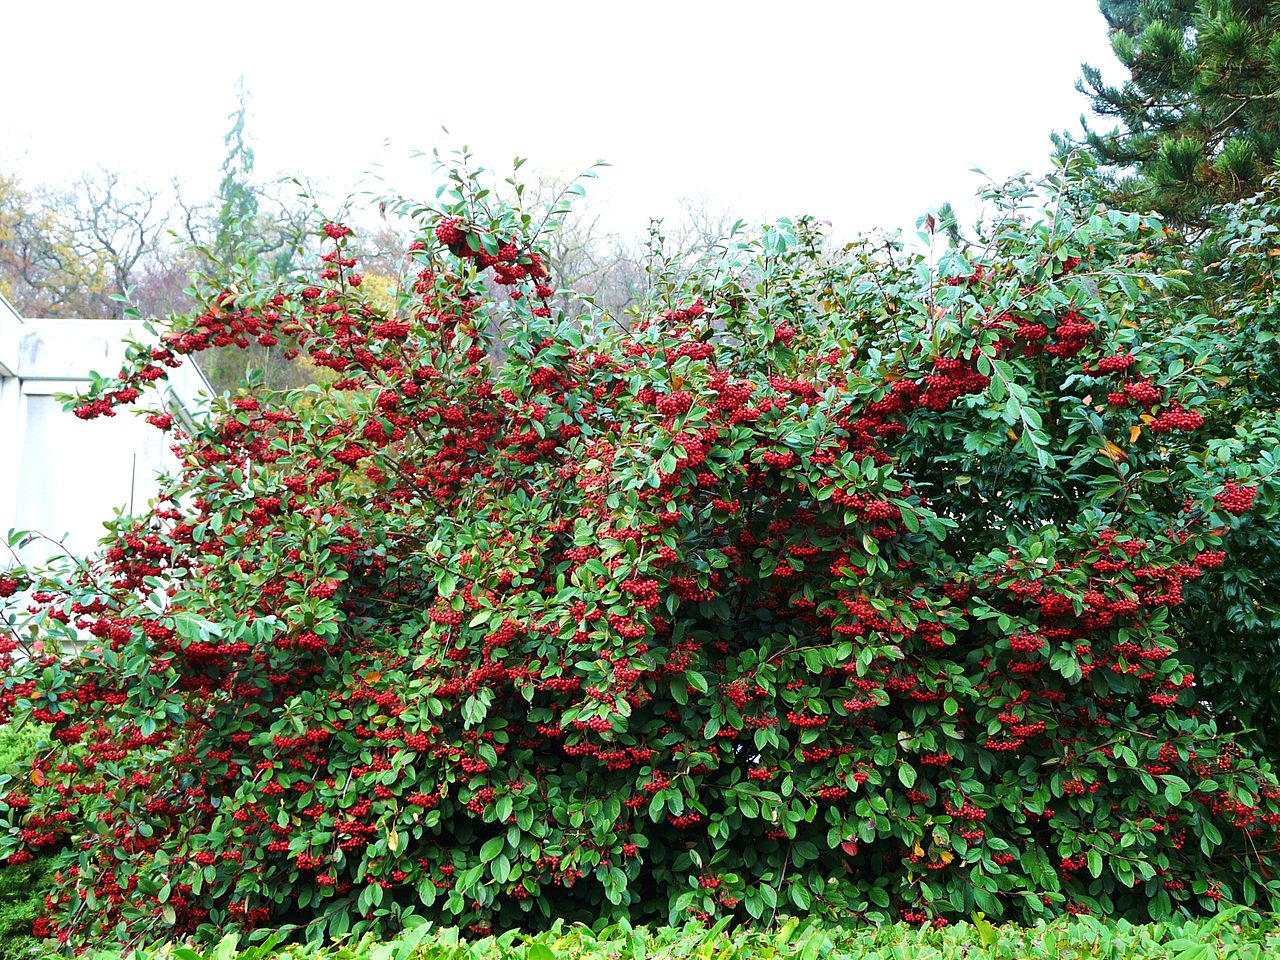 http://gardener.klandaic.com/potokadr/berries/19dogwood.jpg